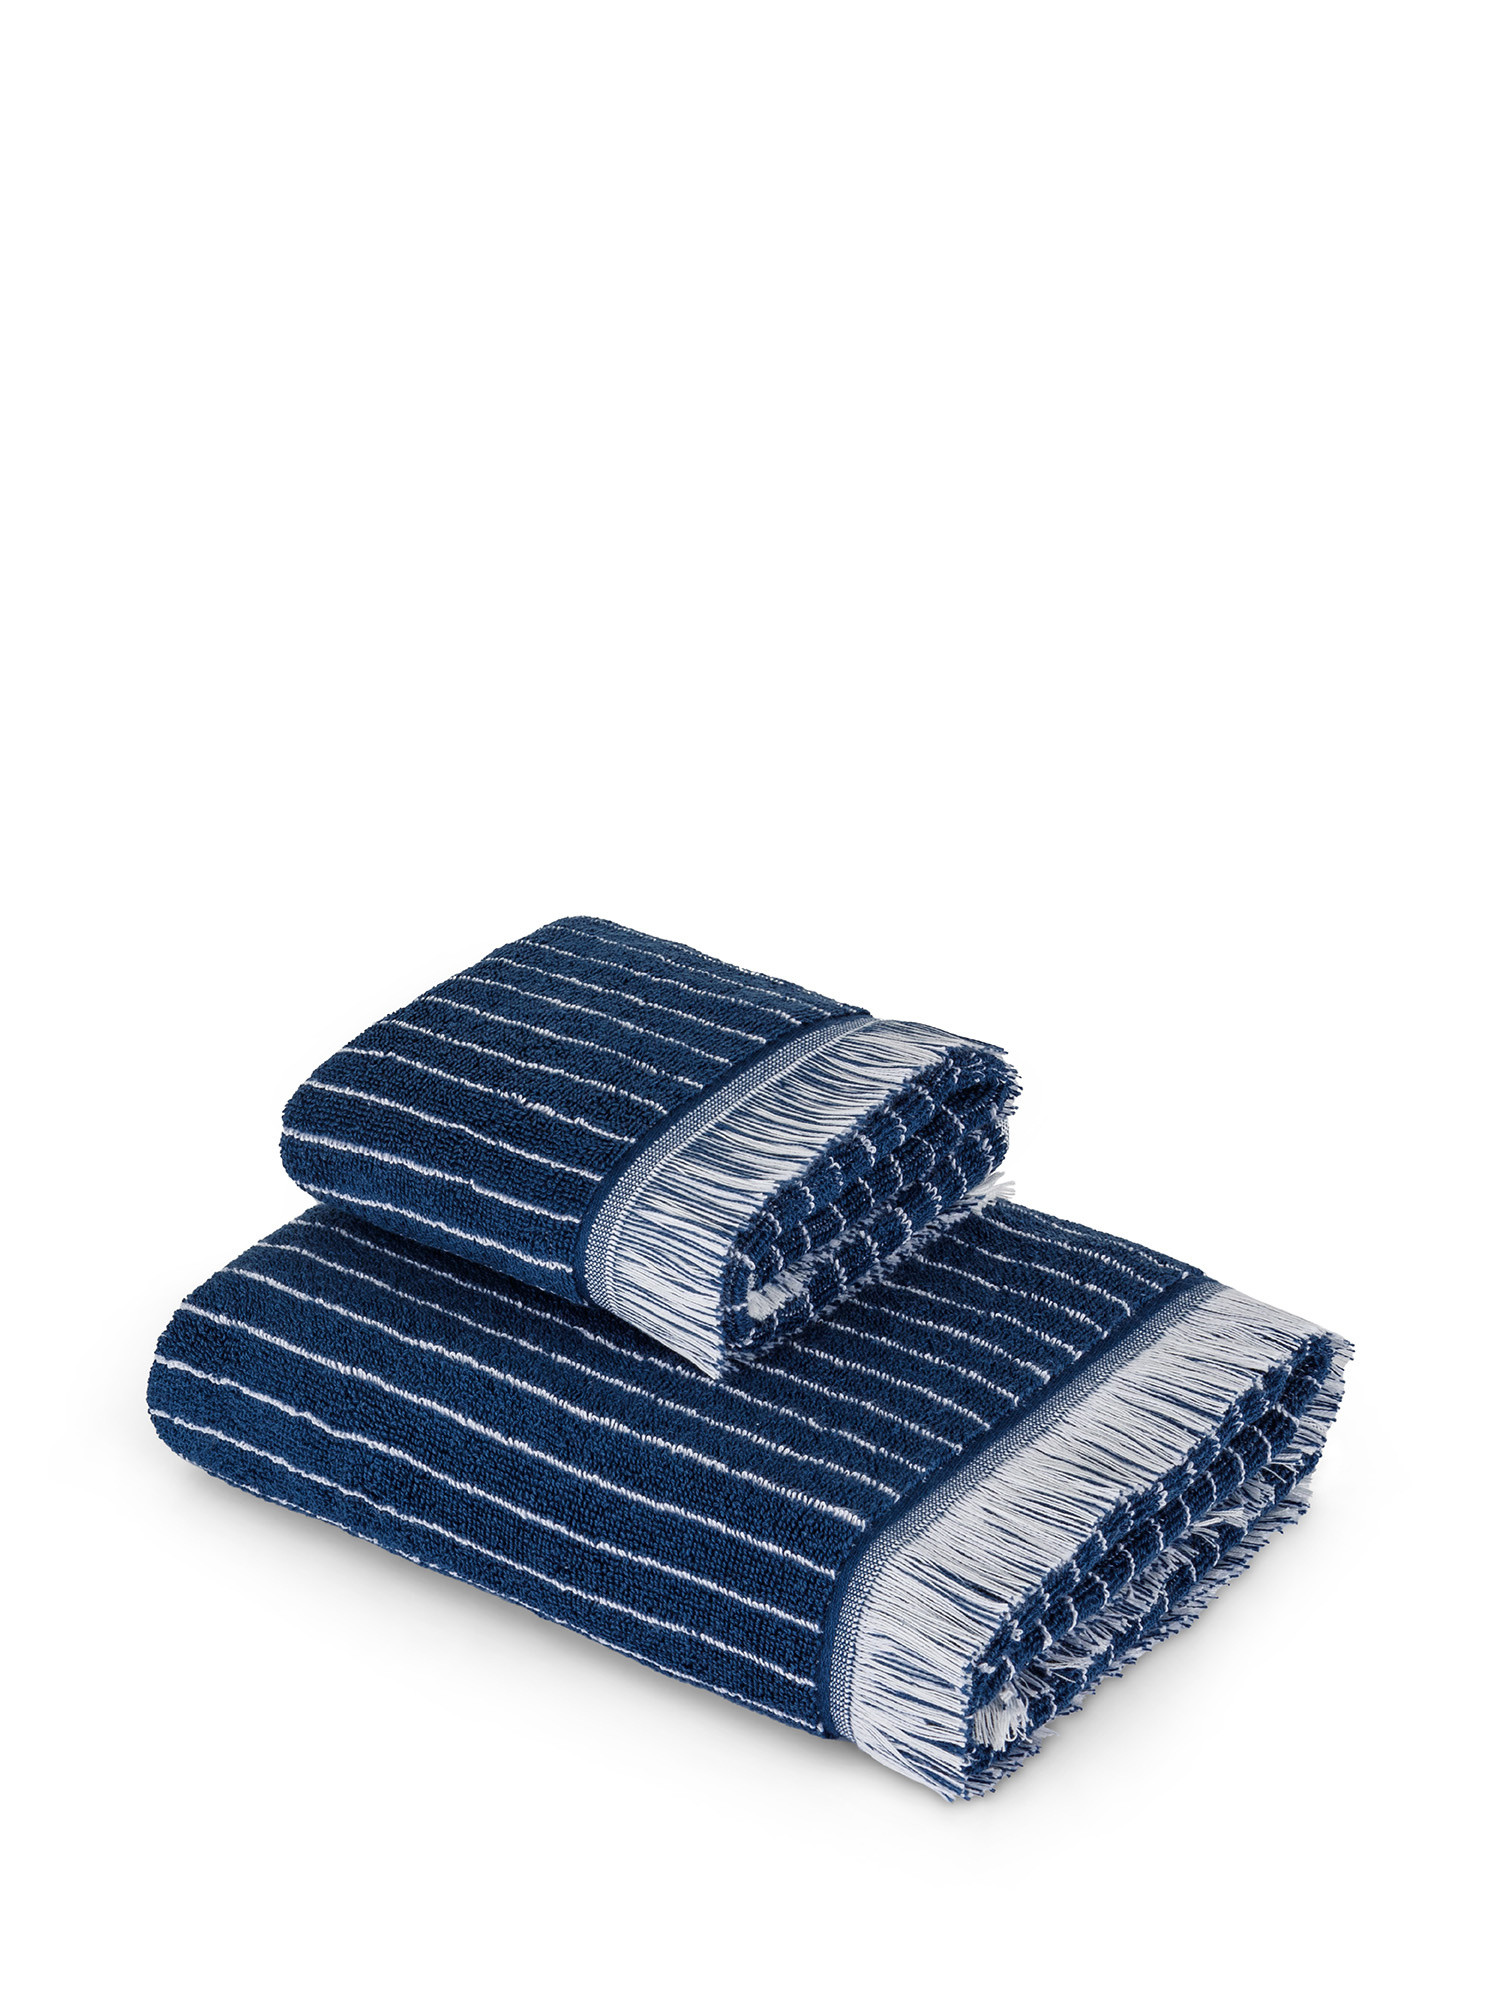 Asciugamano di puro cotone tinto in filo motivo riga gessata, Blu, large image number 0